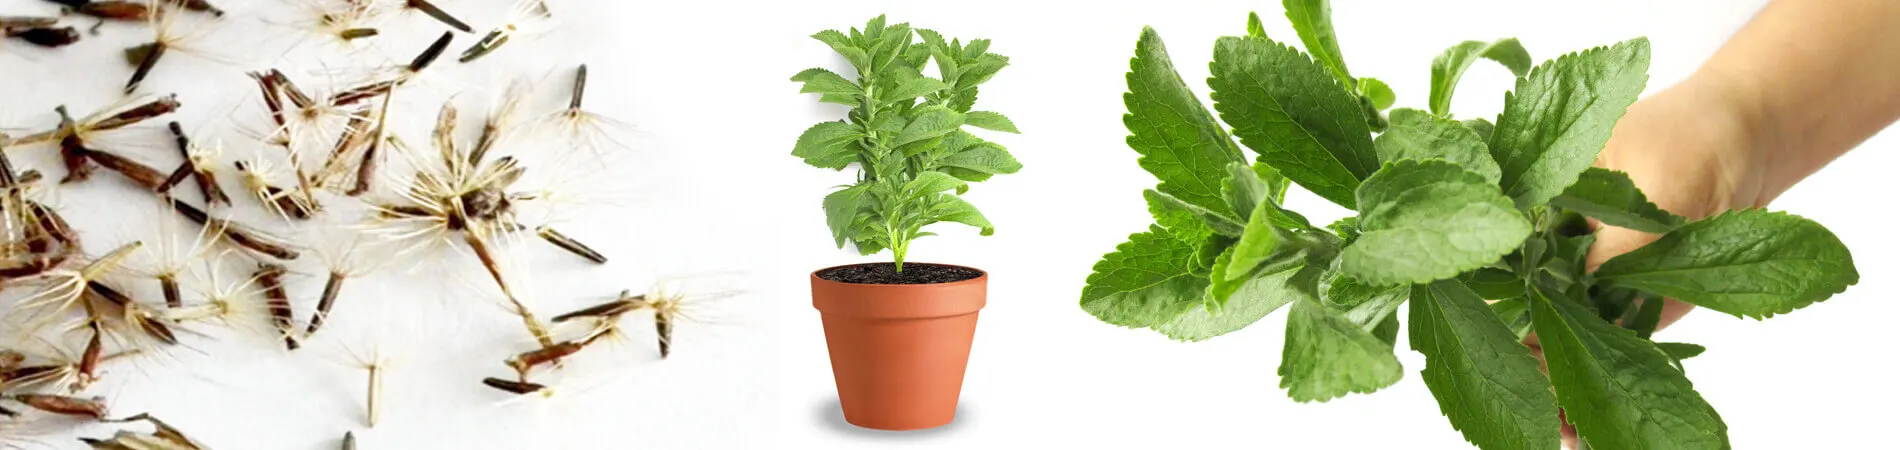 Kann man Stevia selbst anbauen? Stevia Samen kaufen.